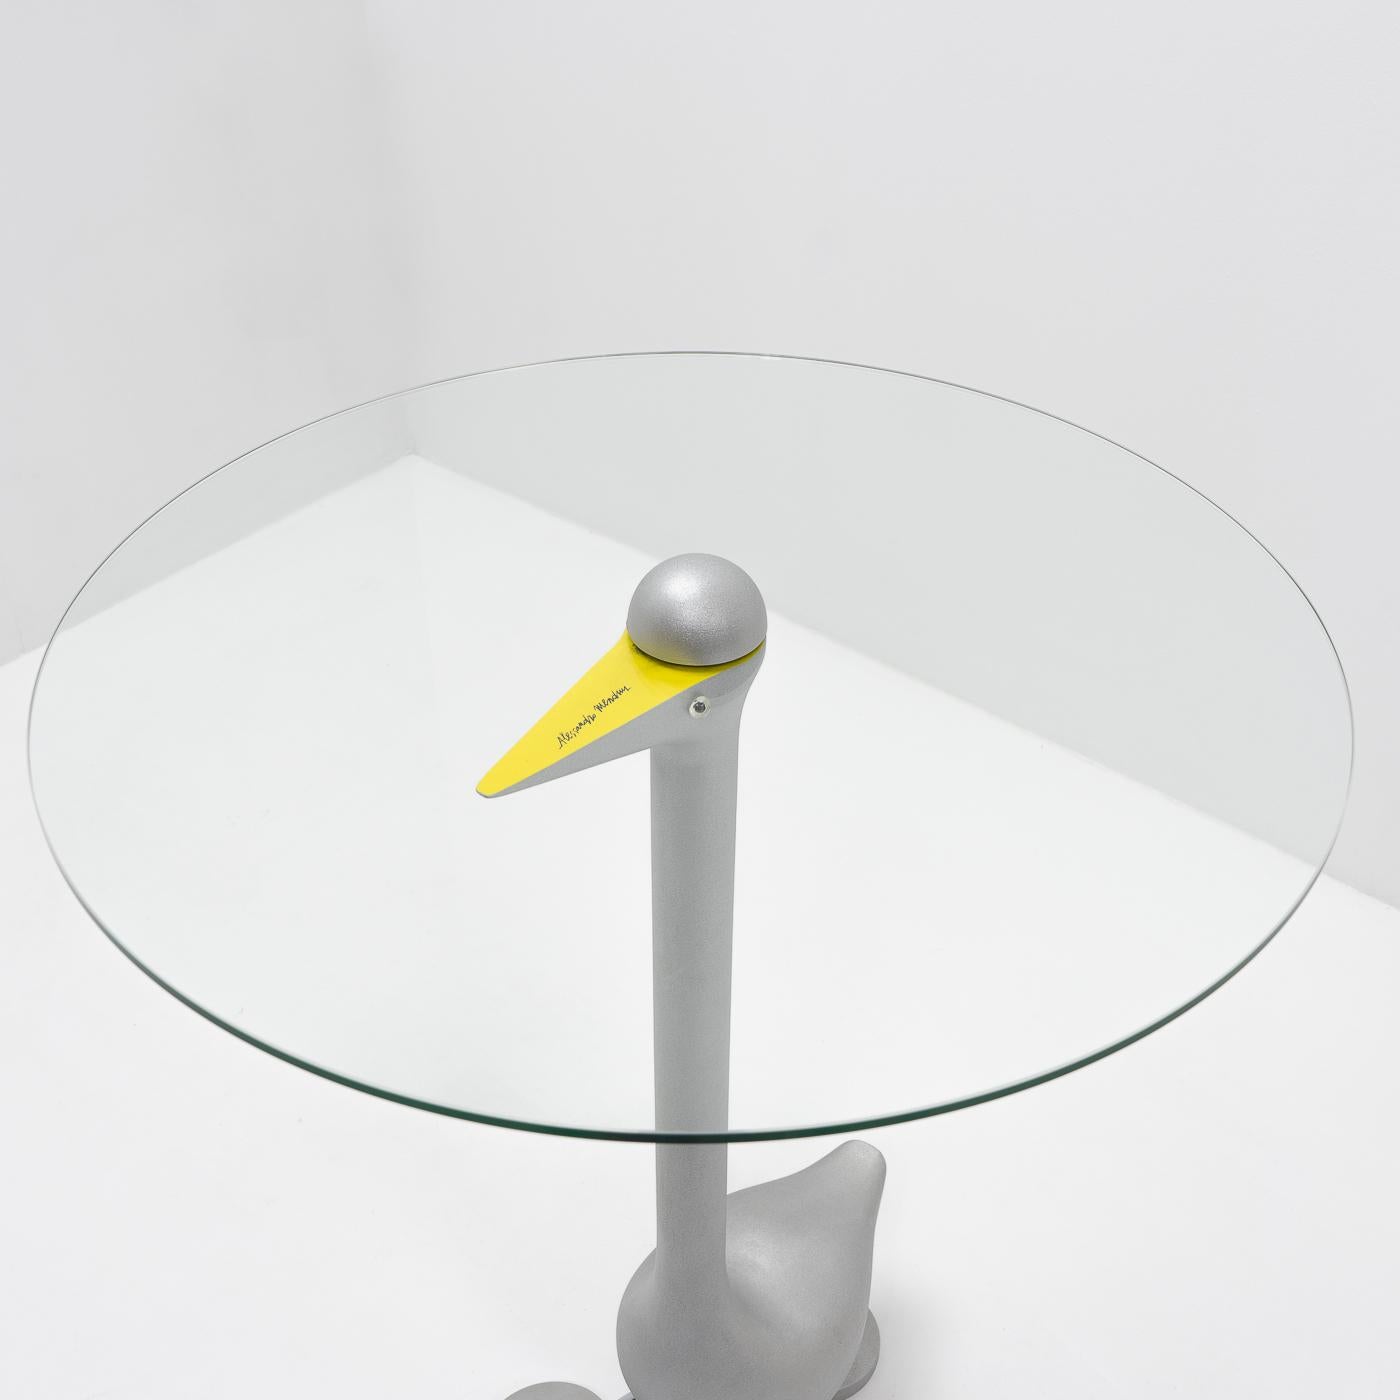 Late 20th Century Italian Postmodern Alessandro Mendini, “Sirfo” Side Table, 1980s